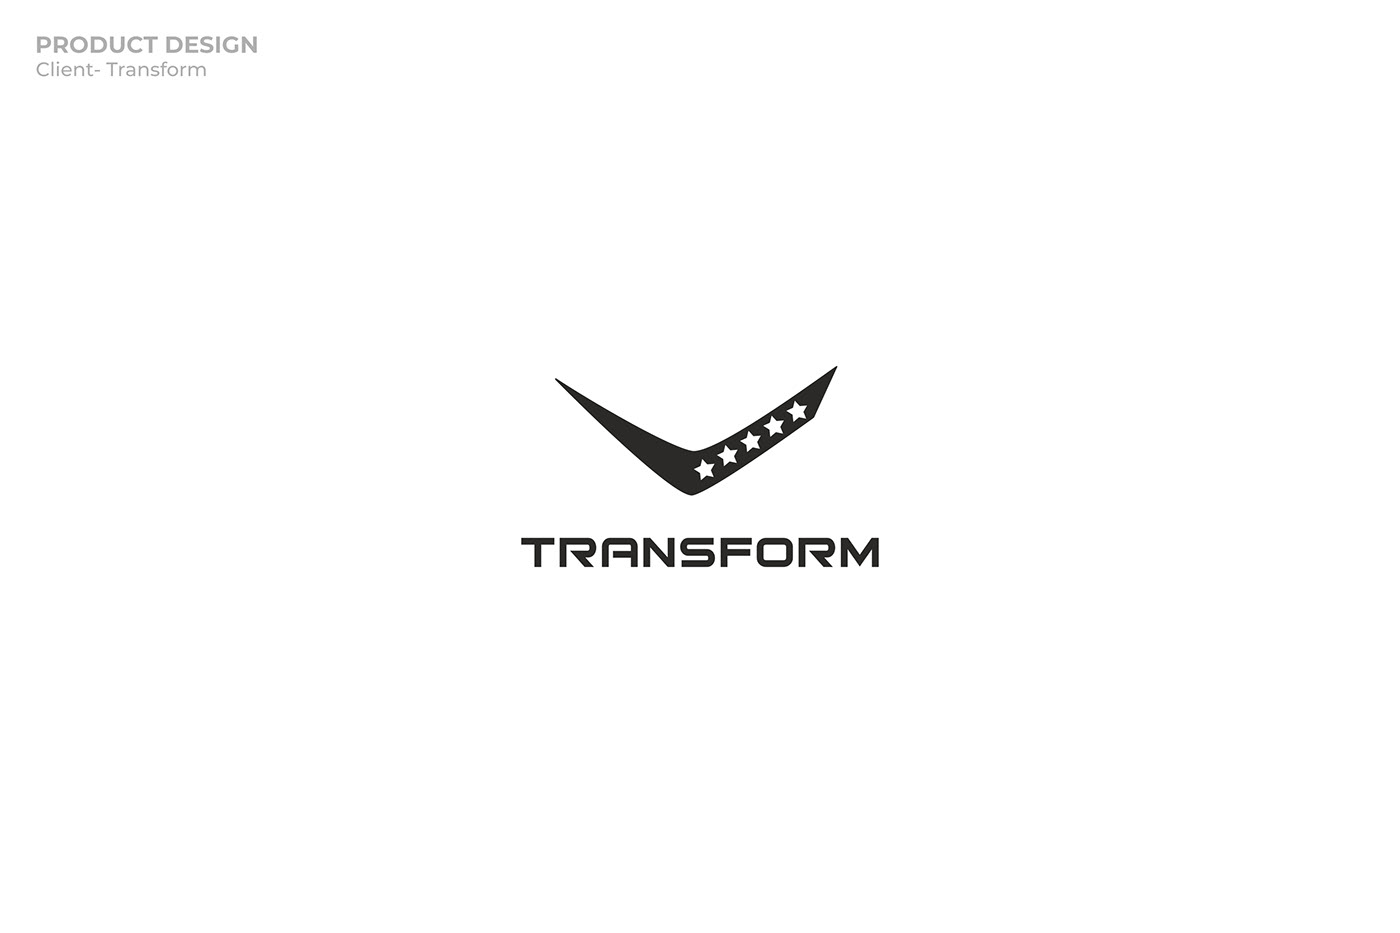 Brand: Transform